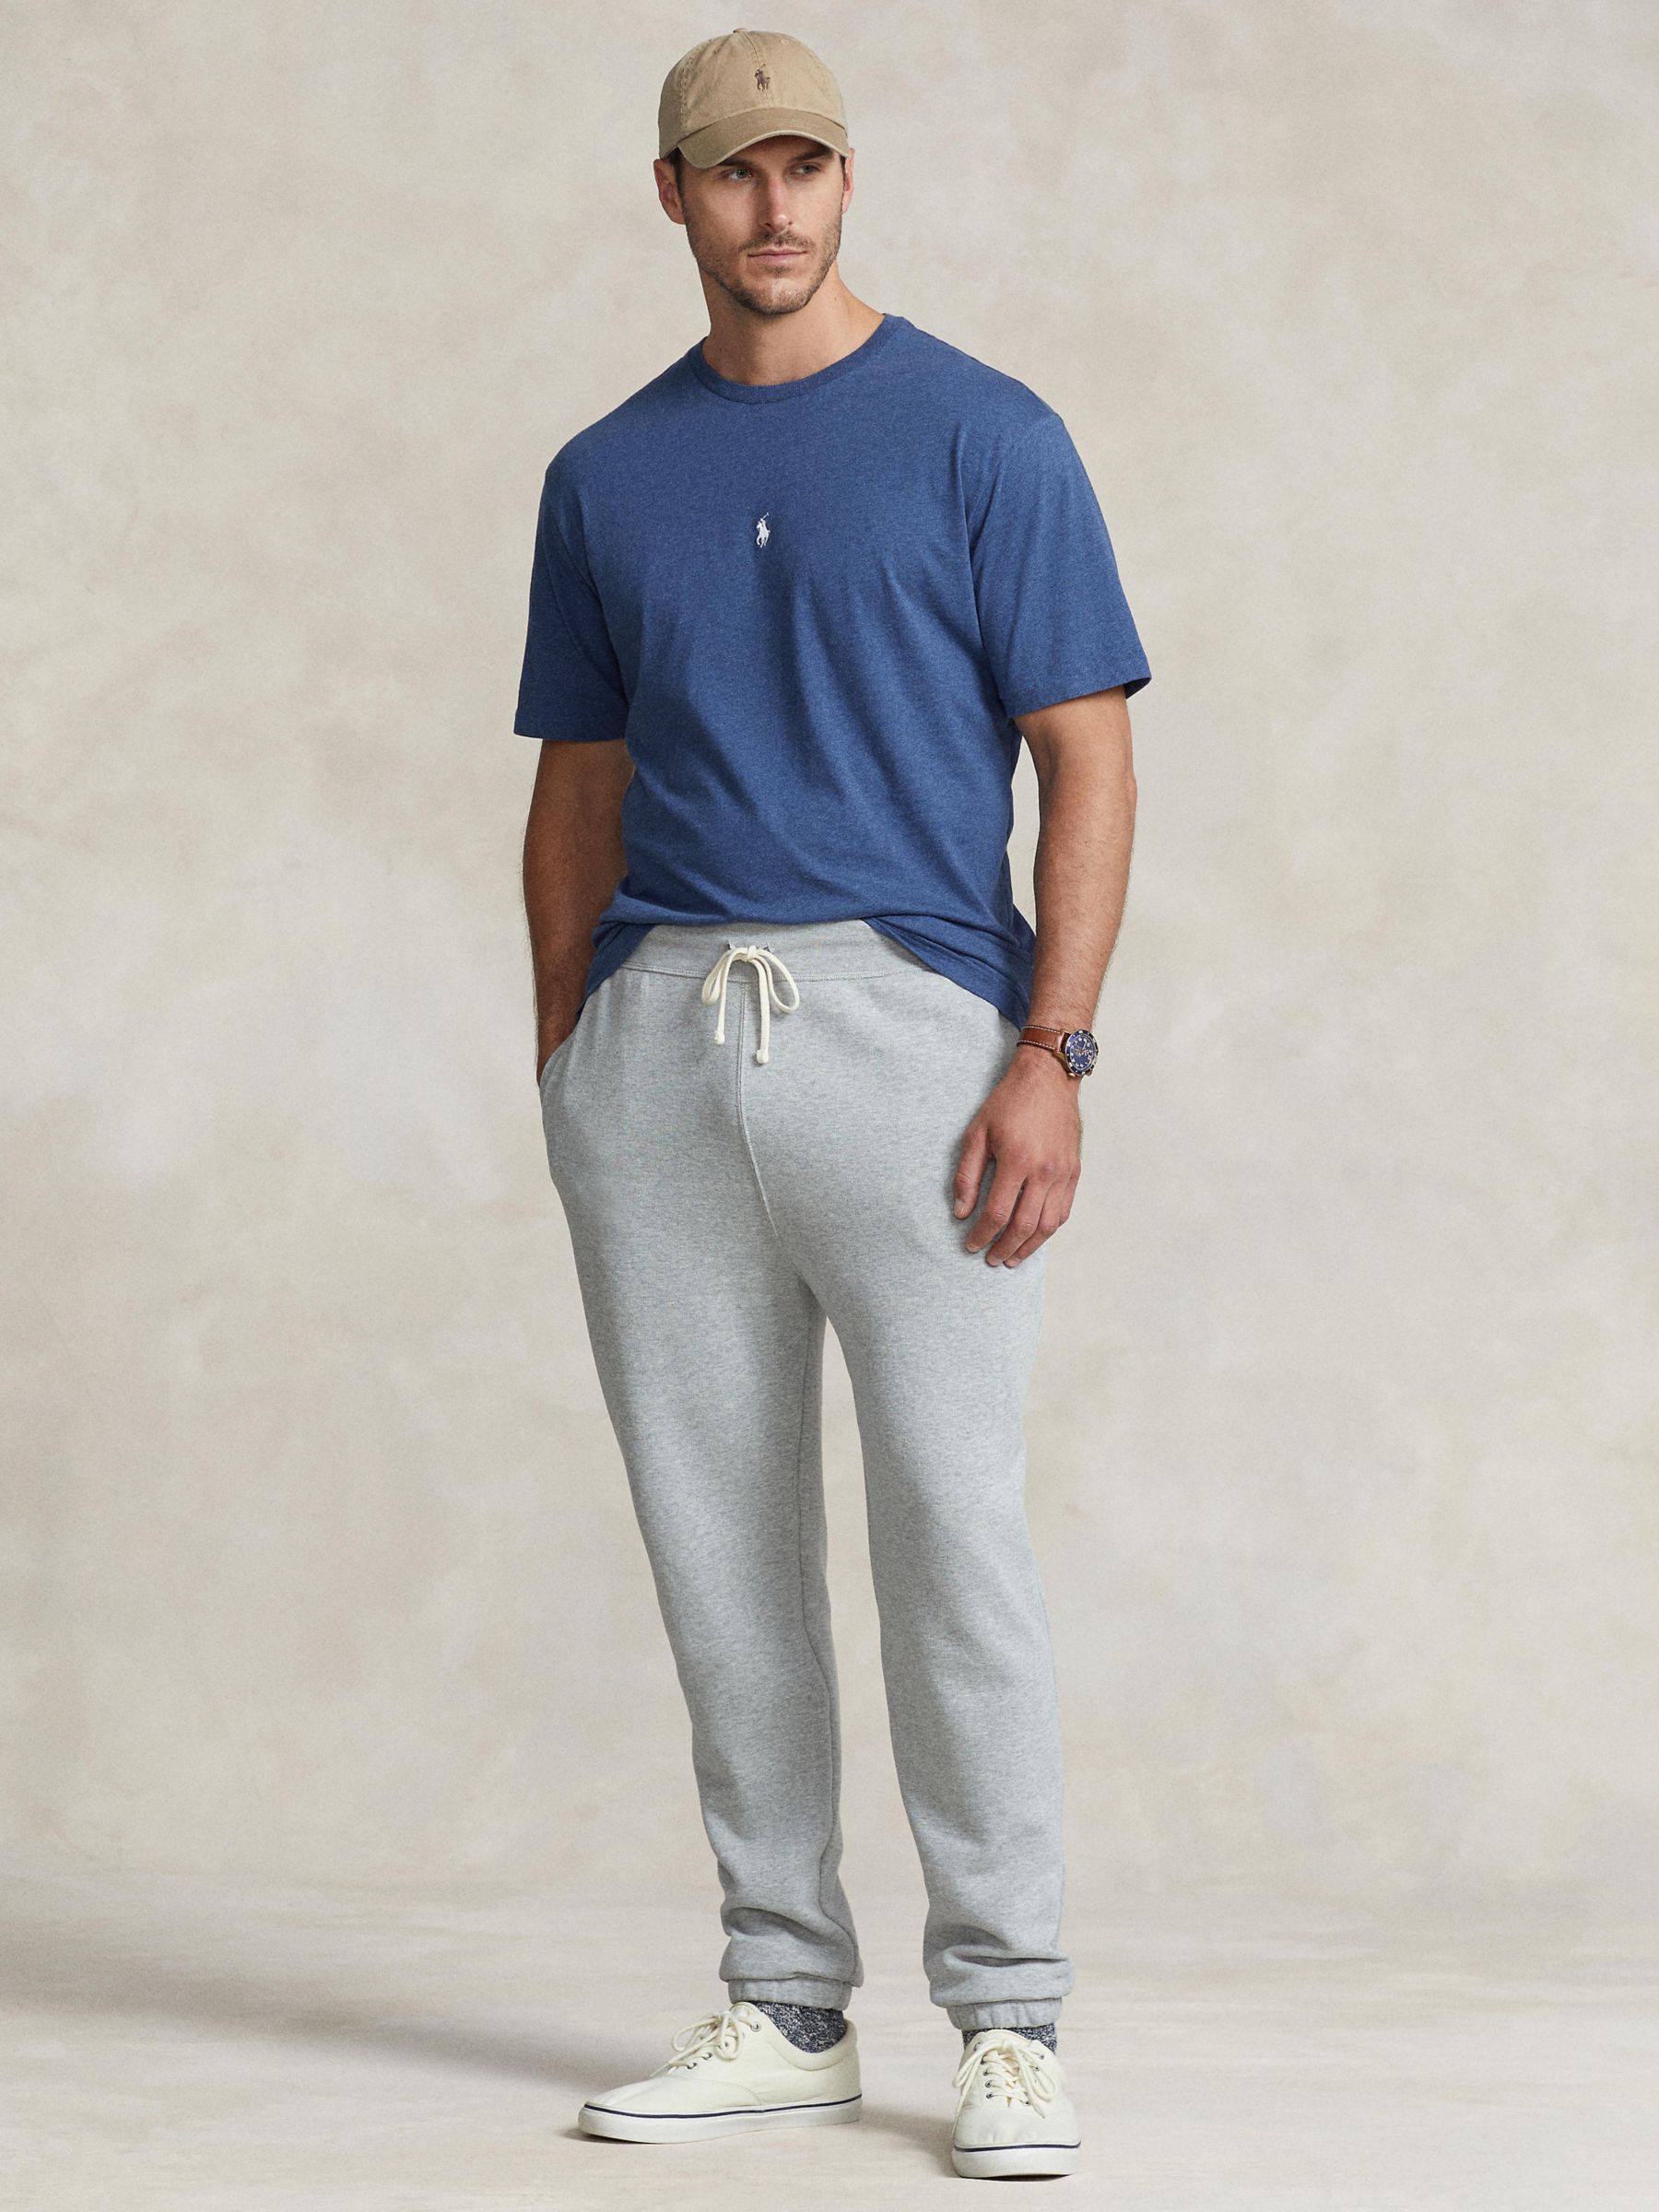 Polo Ralph Lauren Big & Tall Cotton T-Shirt, Derby Blue Heather at